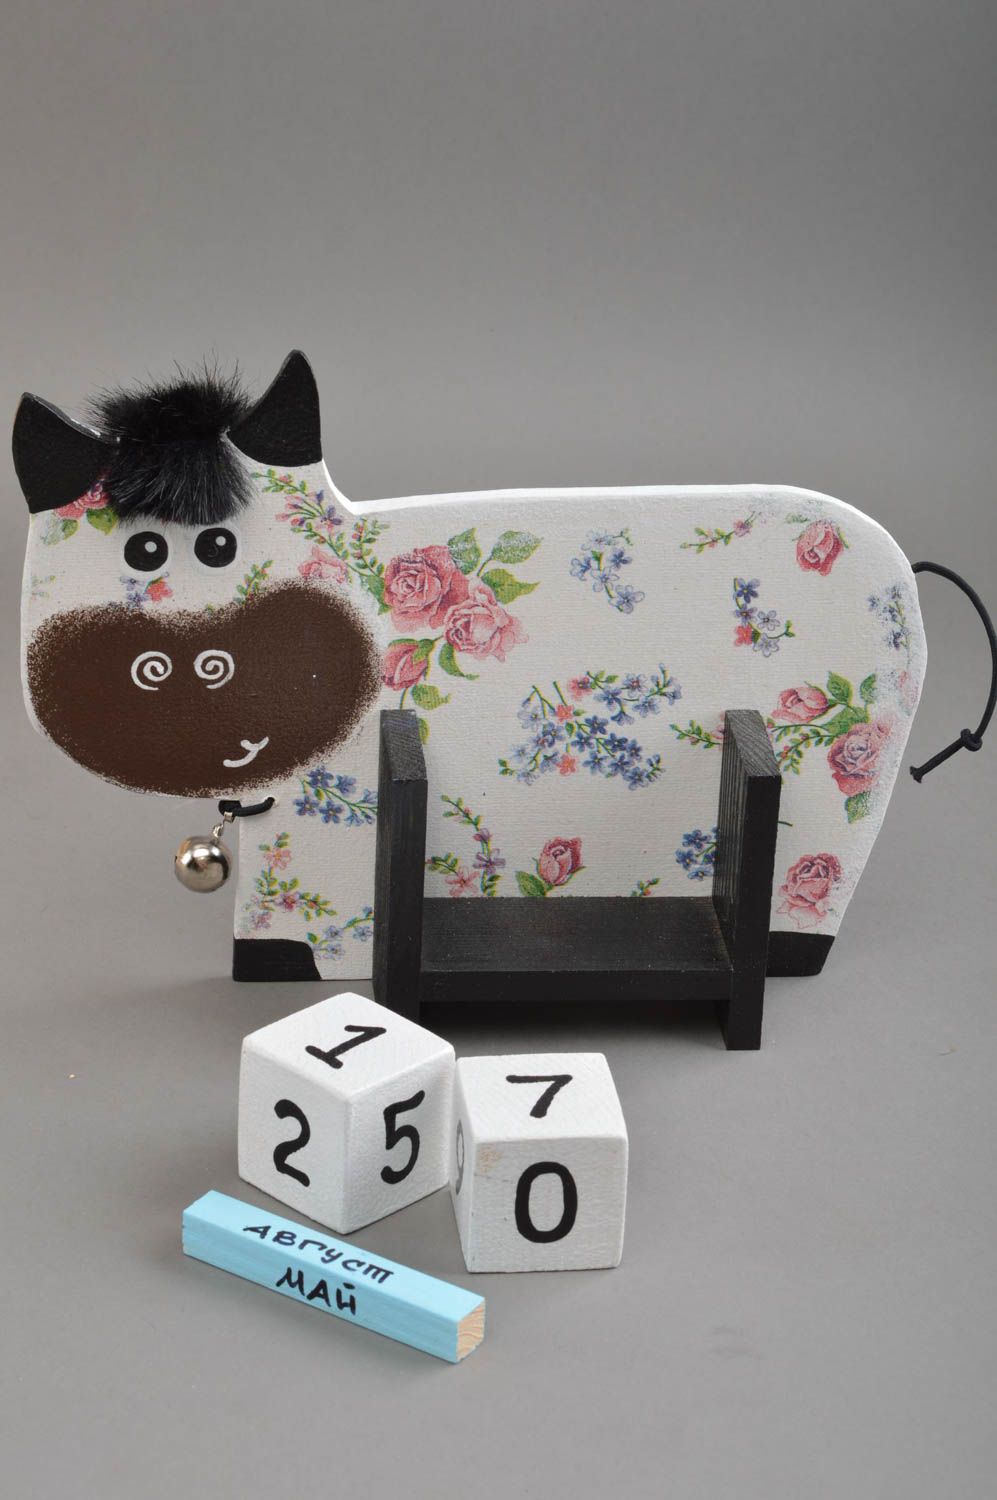 Handmade calendar for kids unusual cow figurine stylish table decor ideas photo 3